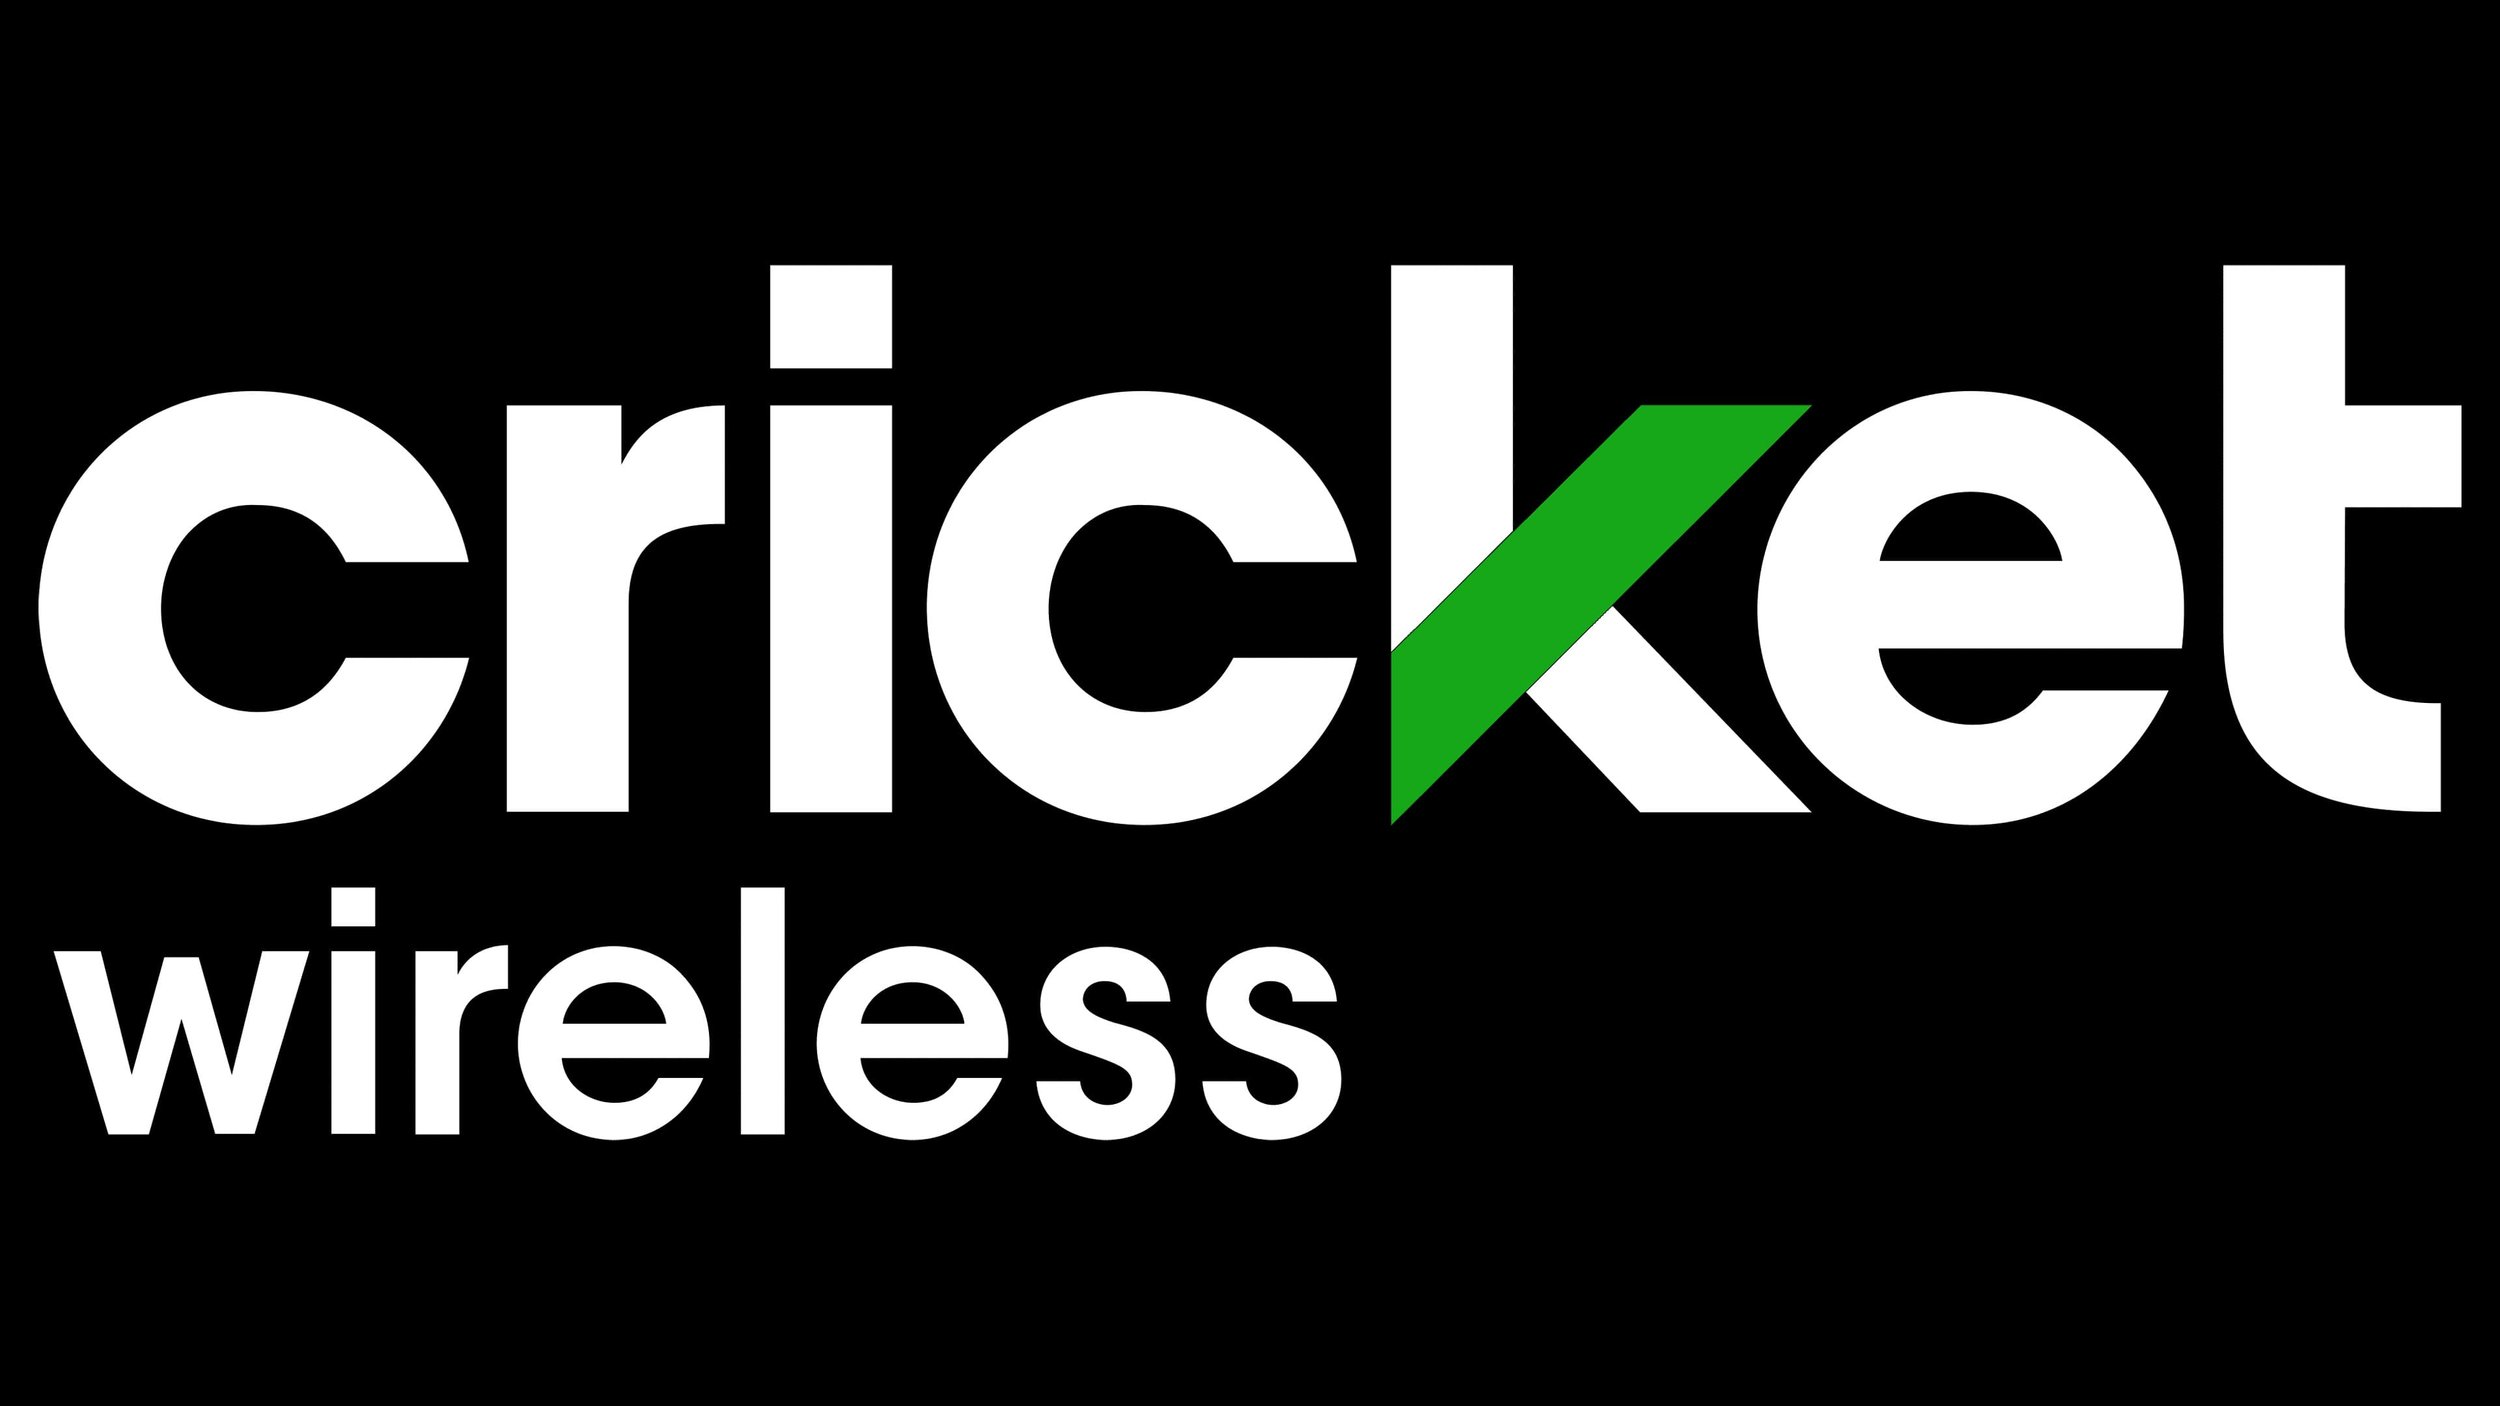 Cricket-Wireless-Symbol.jpg